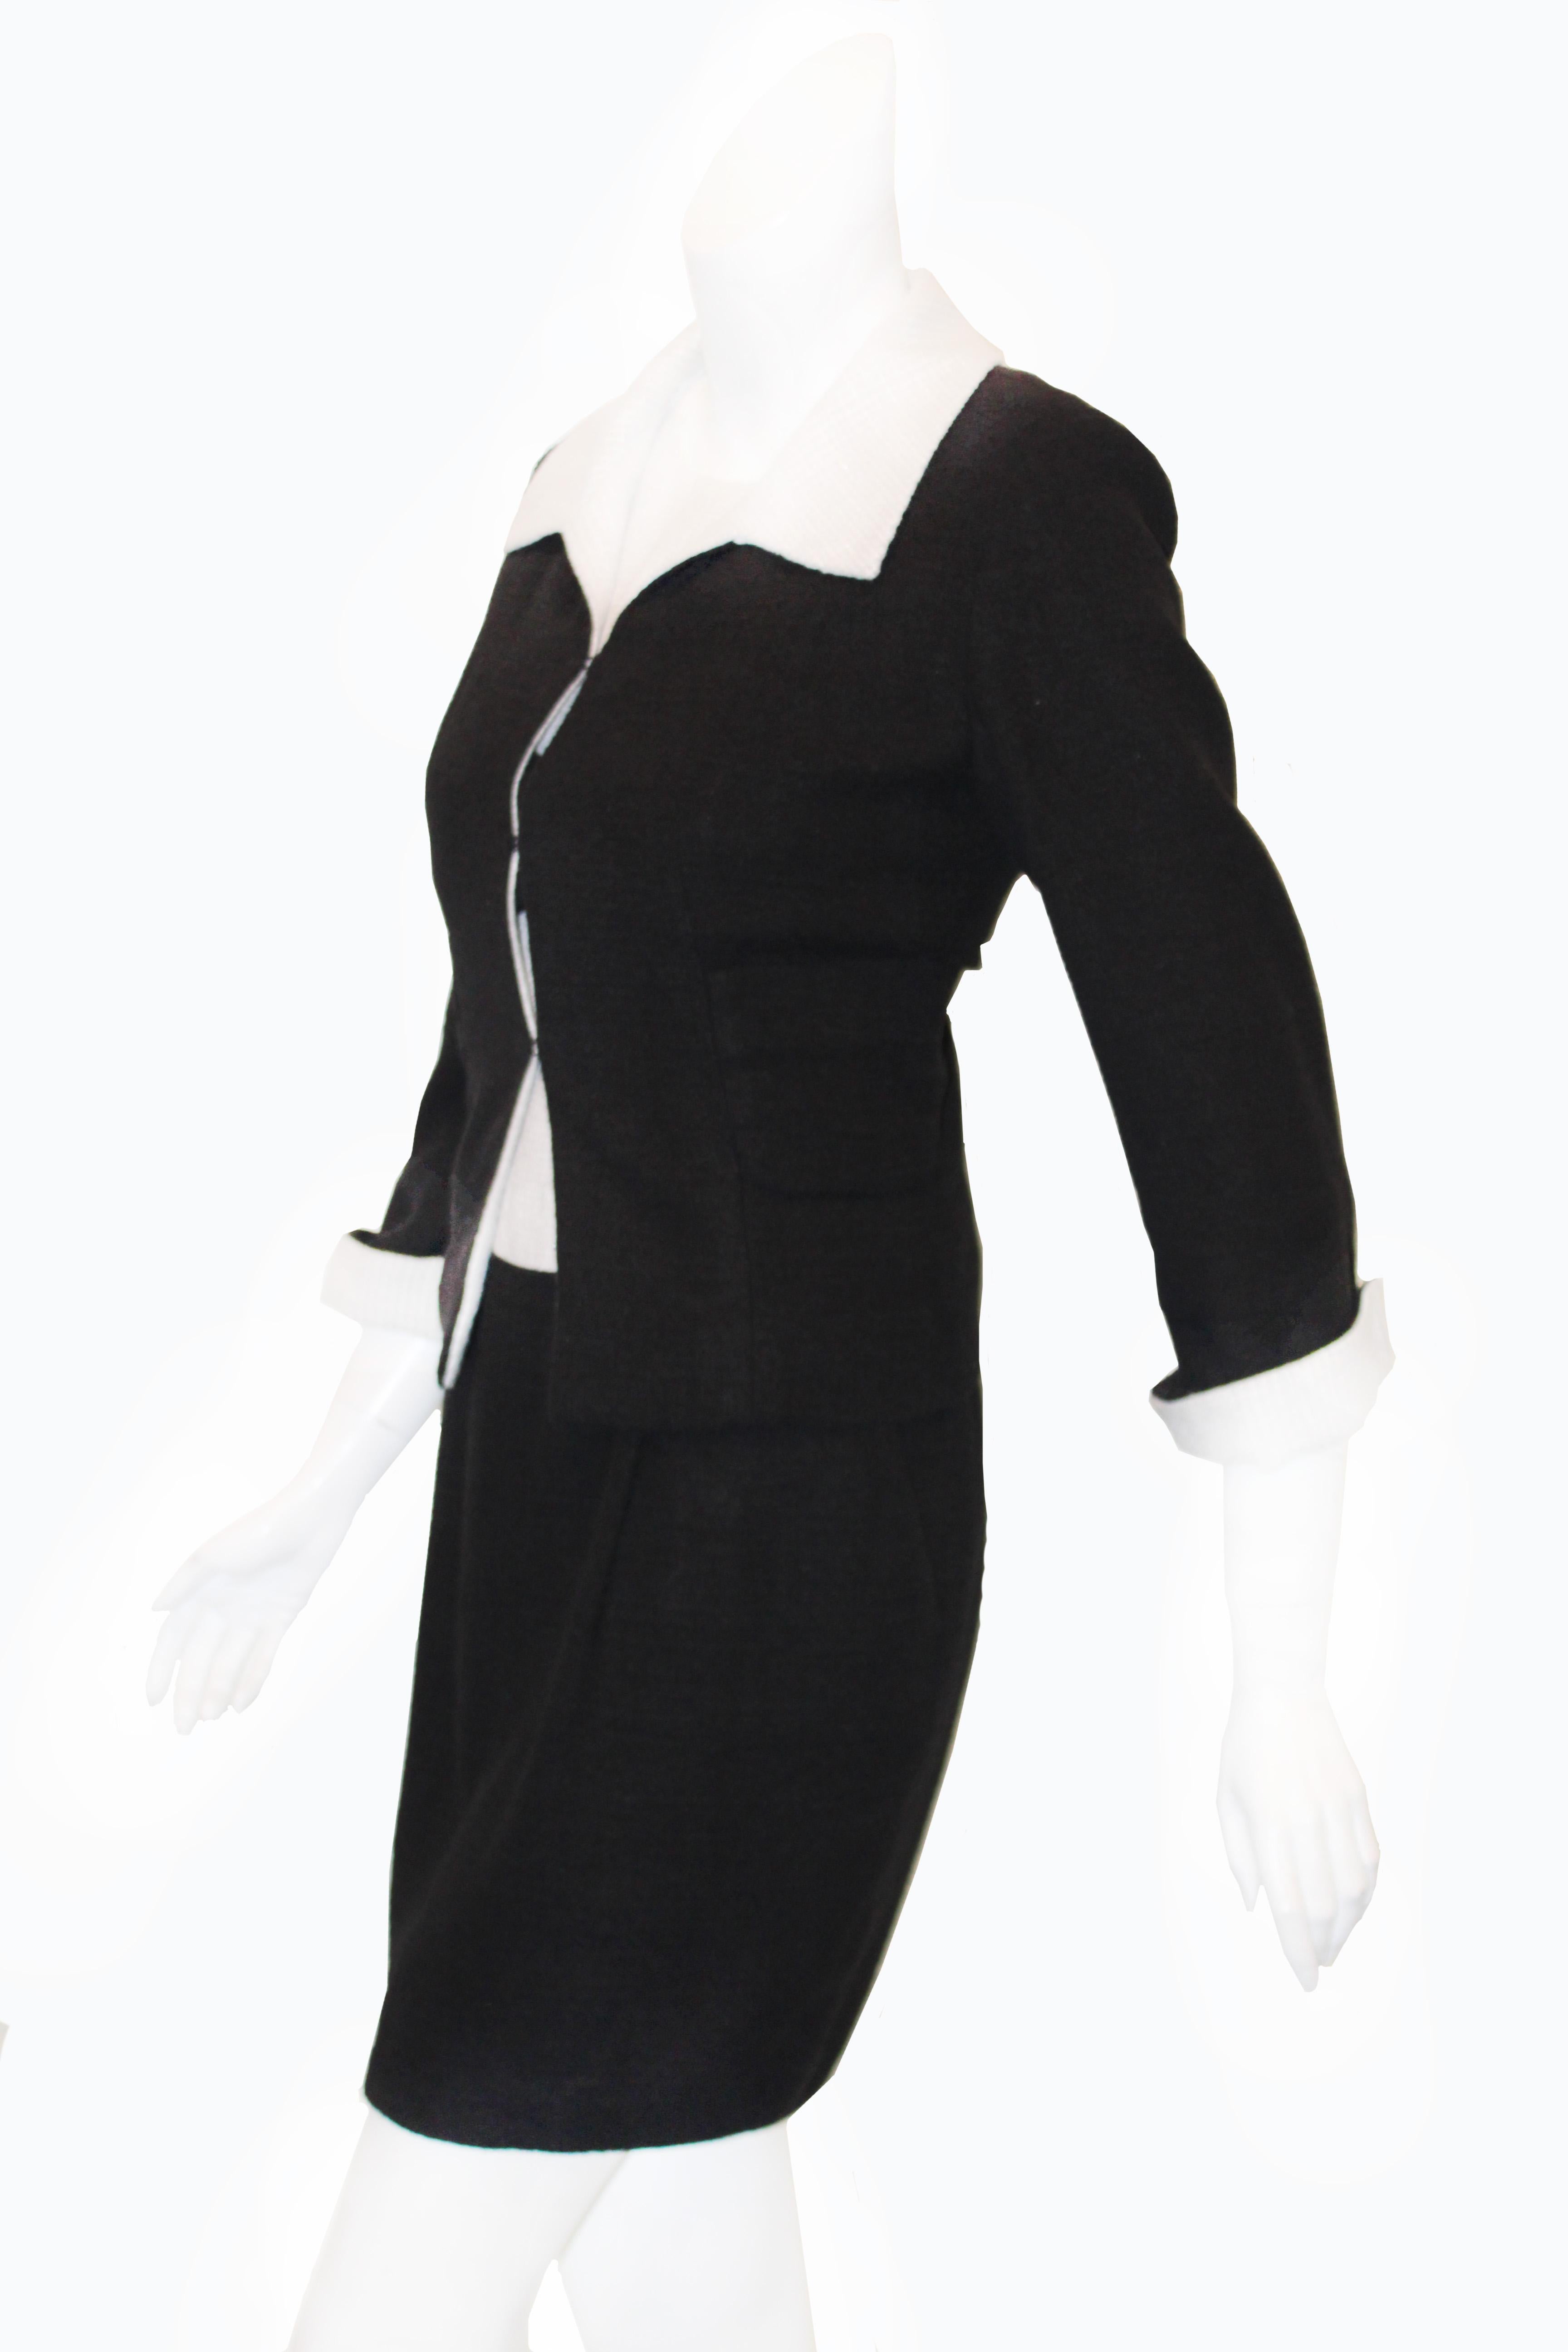 Chanel 2009 Black & Ivory Tweed Dress & Jacket Suit W/ Bow Accent on Dress im Angebot 1